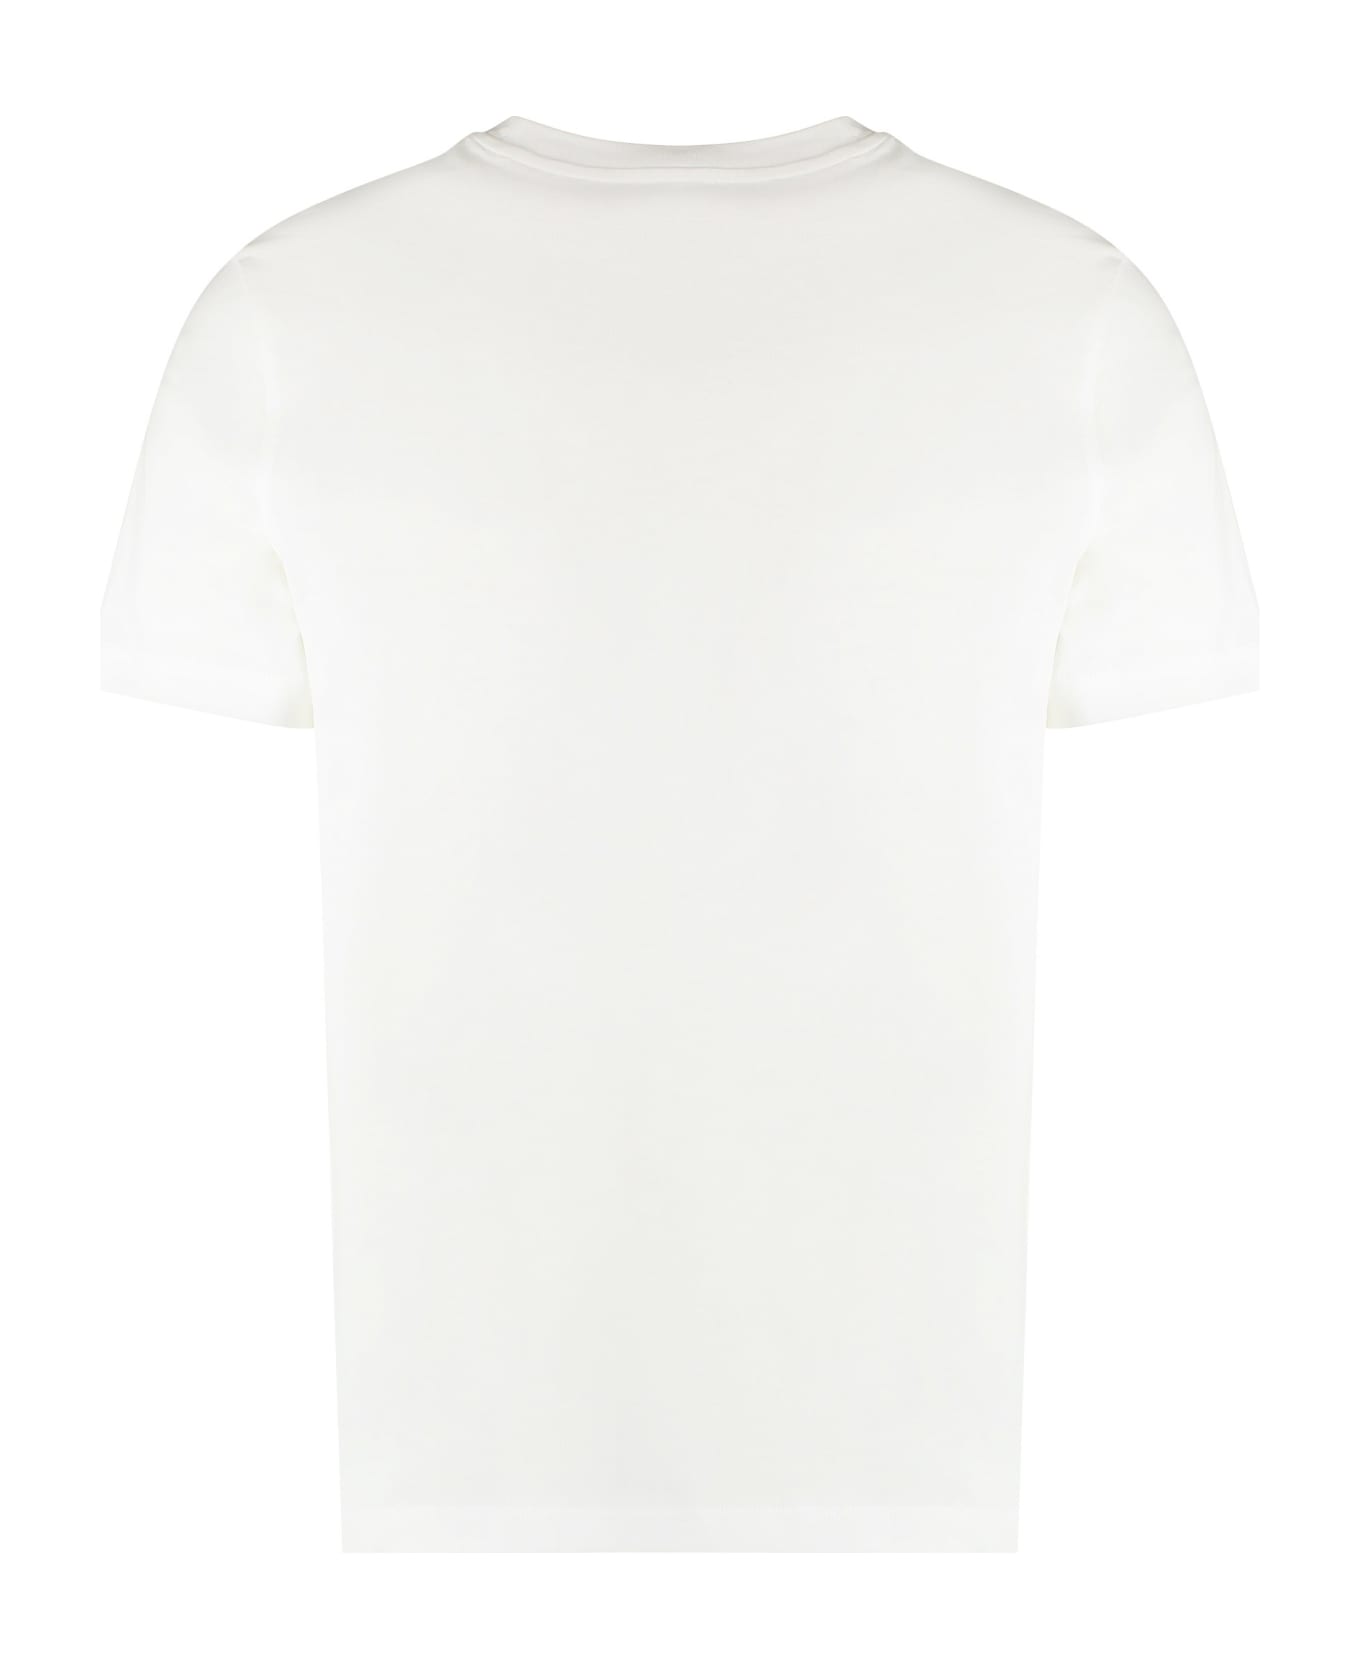 A.P.C. James Logo T-shirt - White シャツ